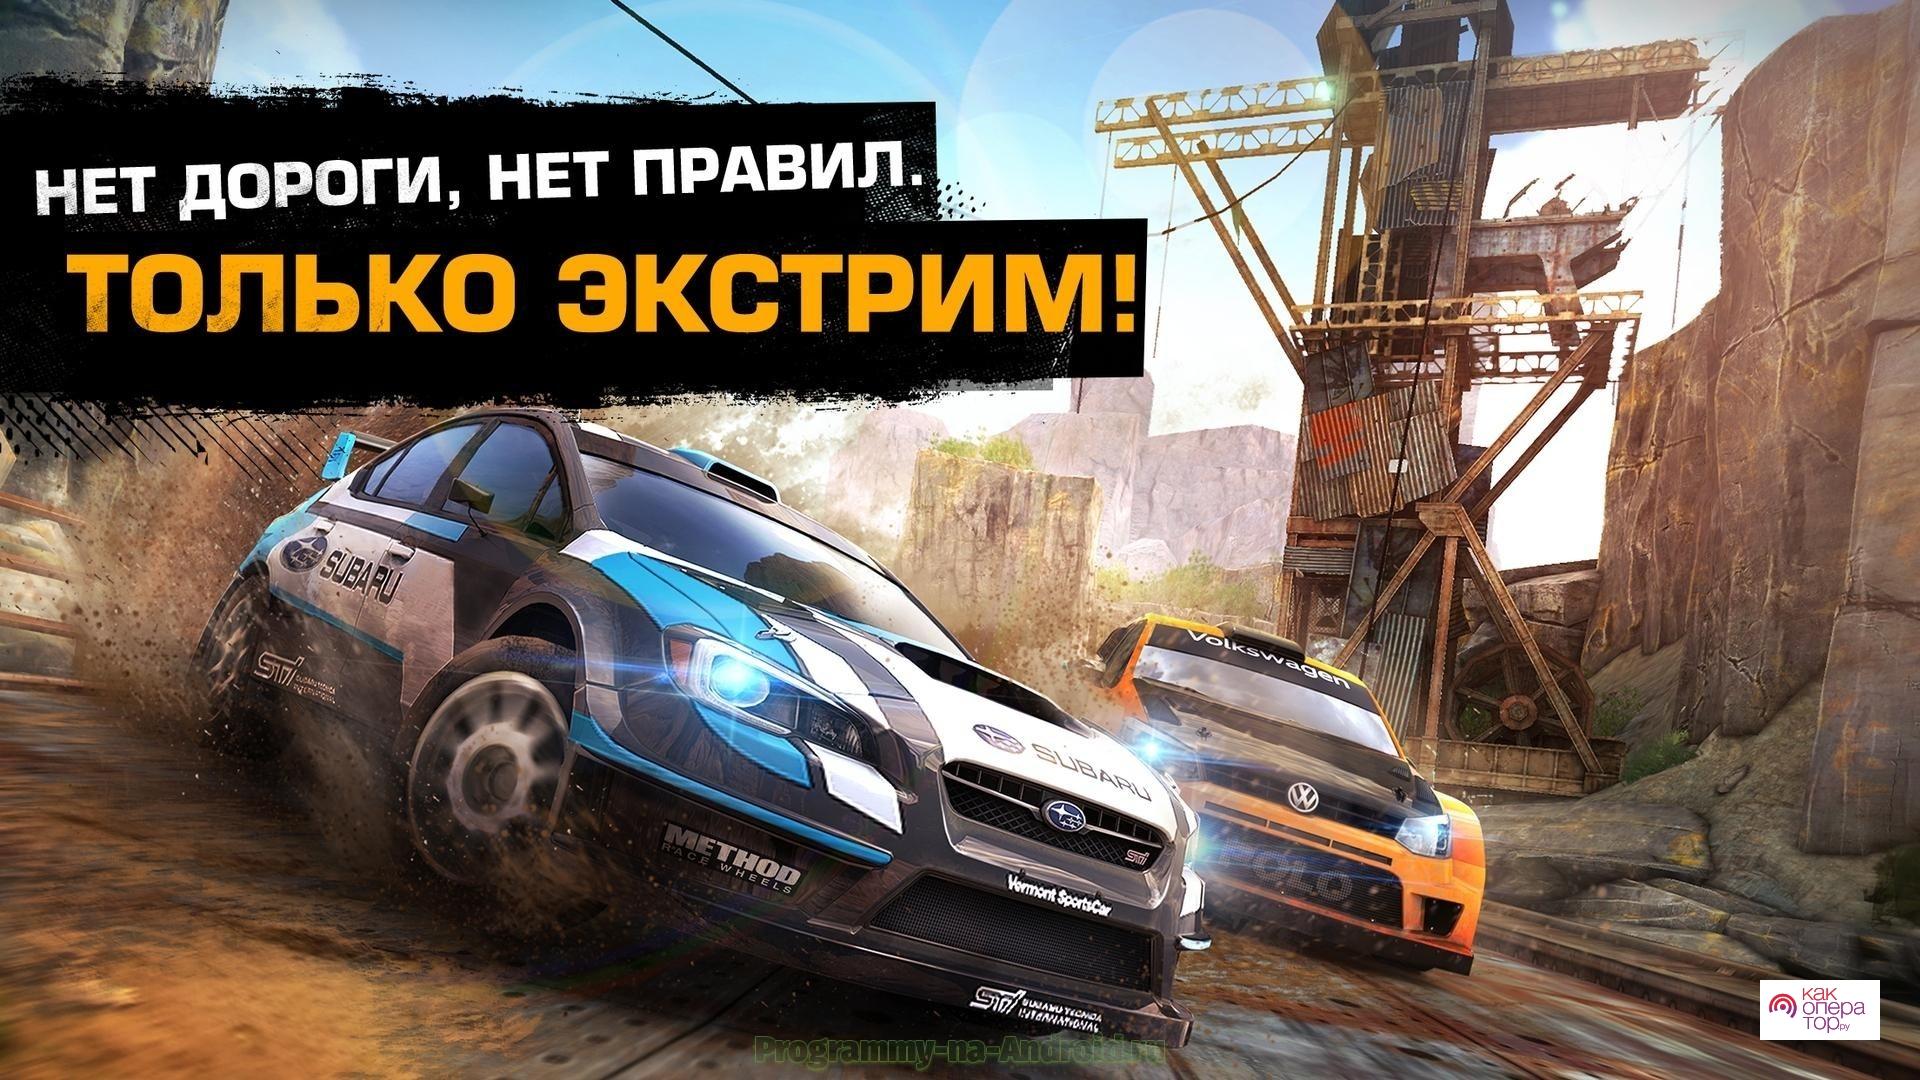 https://programmy-na-android.ru/images/asphalt-xtreme-rally-racing-screen-1.jpg